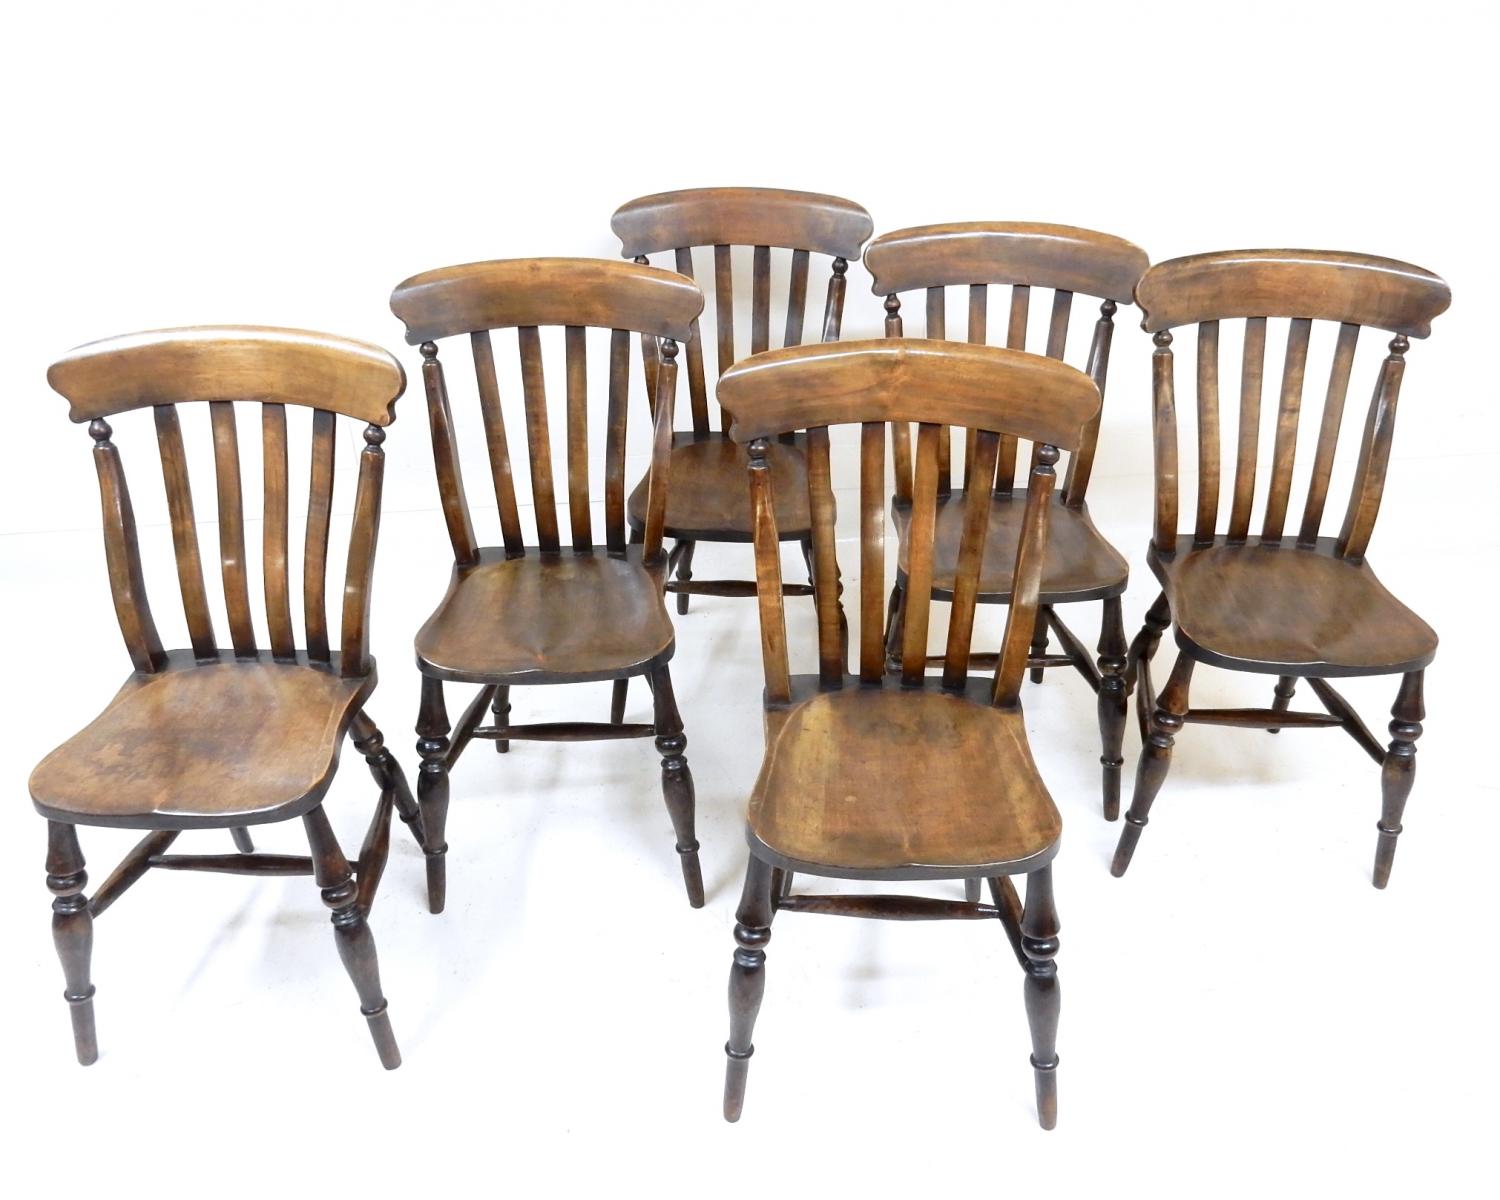 Antique Windsor Kitchen Chairs